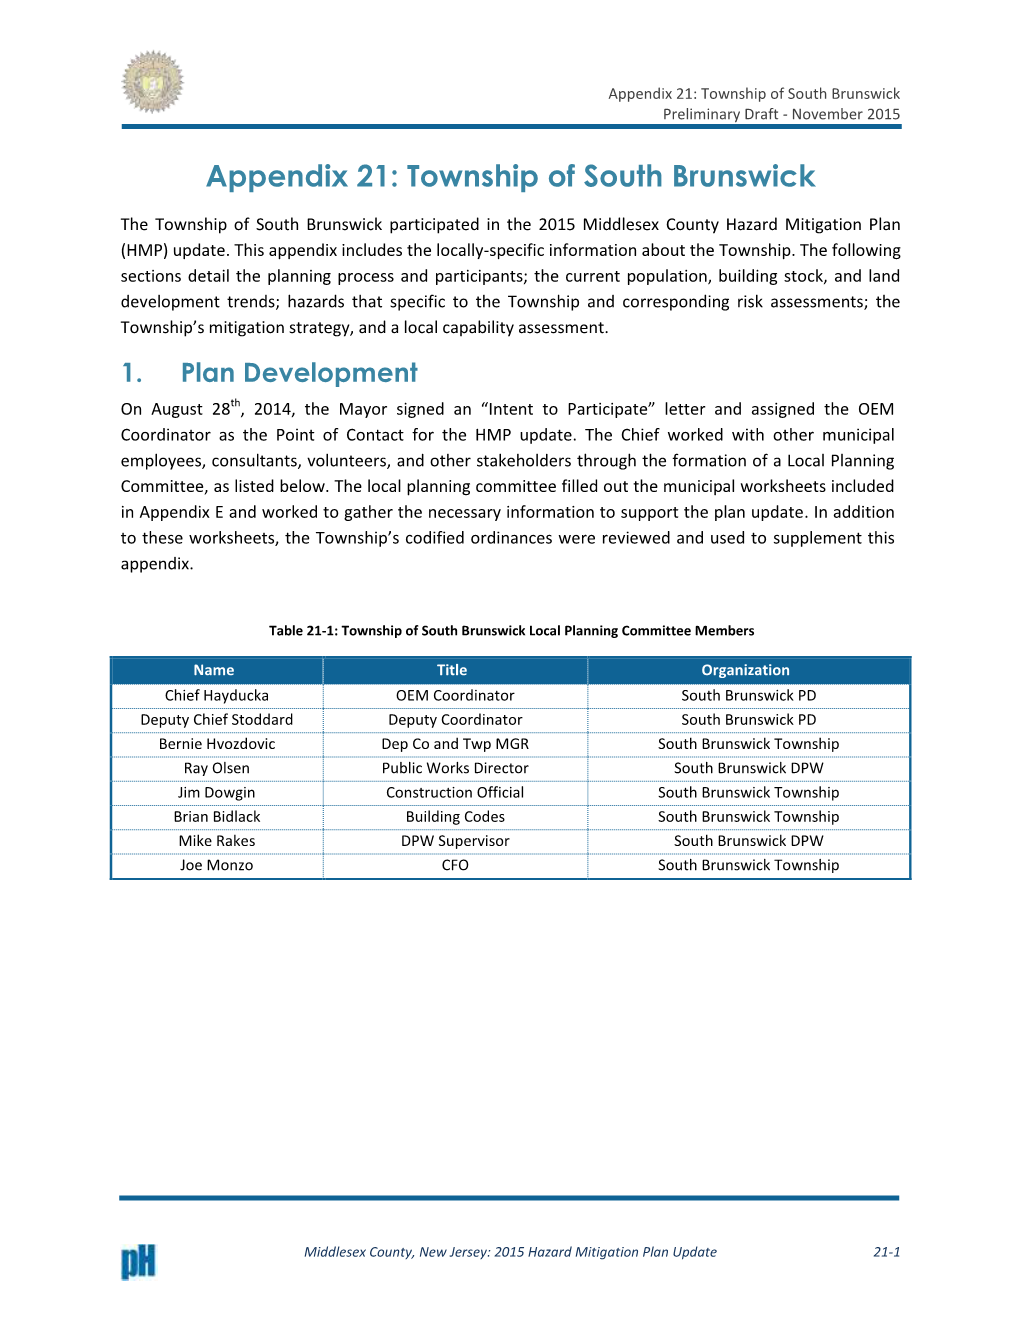 Appendix 21: Township of South Brunswick Preliminary Draft - November 2015